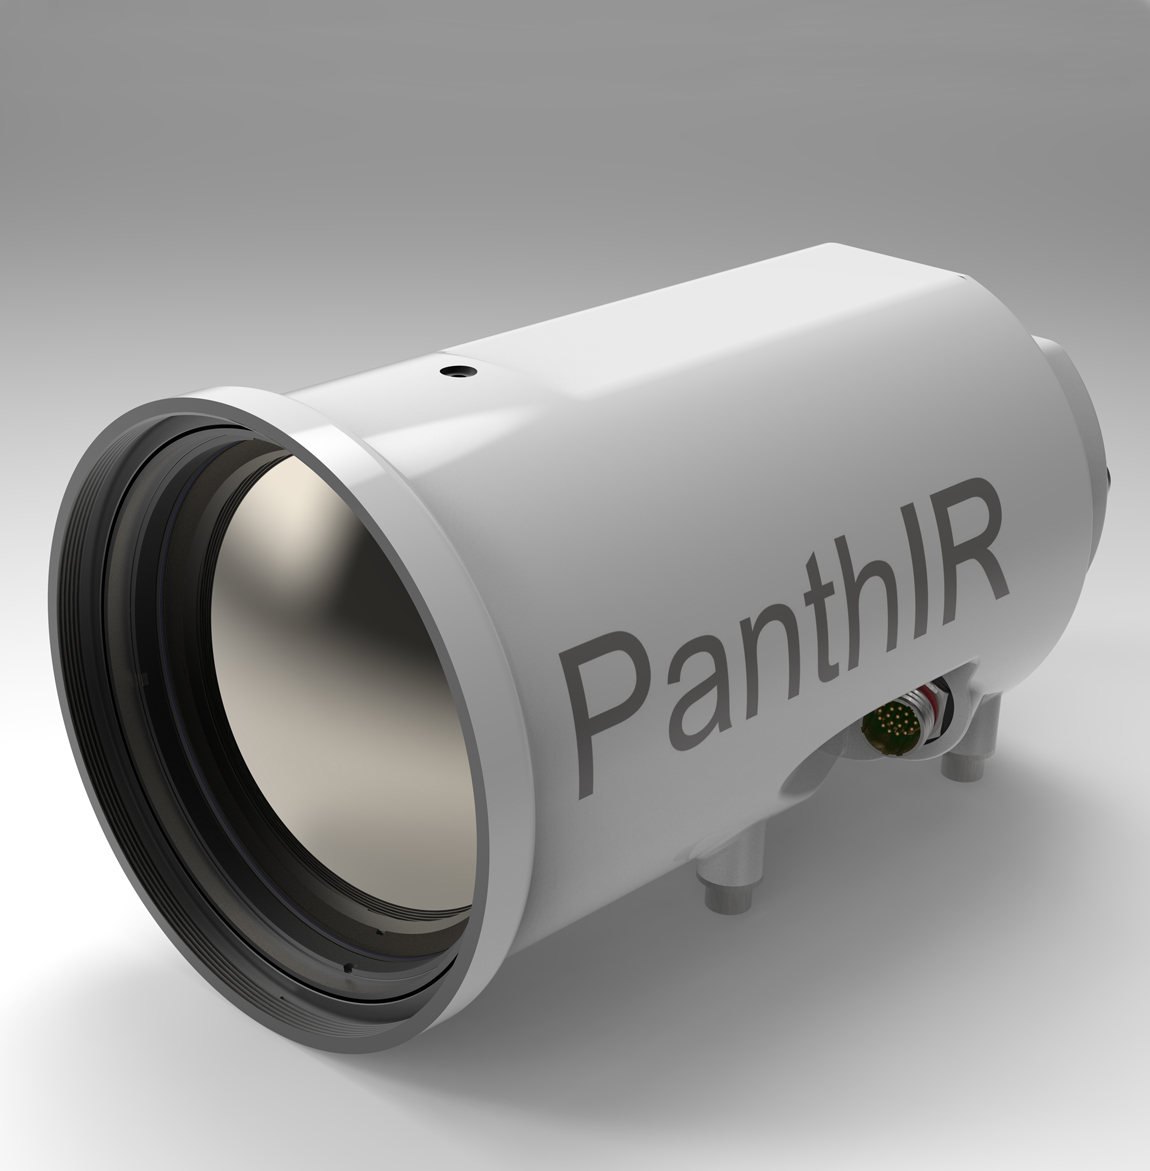 Excelitas' PanthIR Ruggedized Uncooled Continuous Zoom Camera